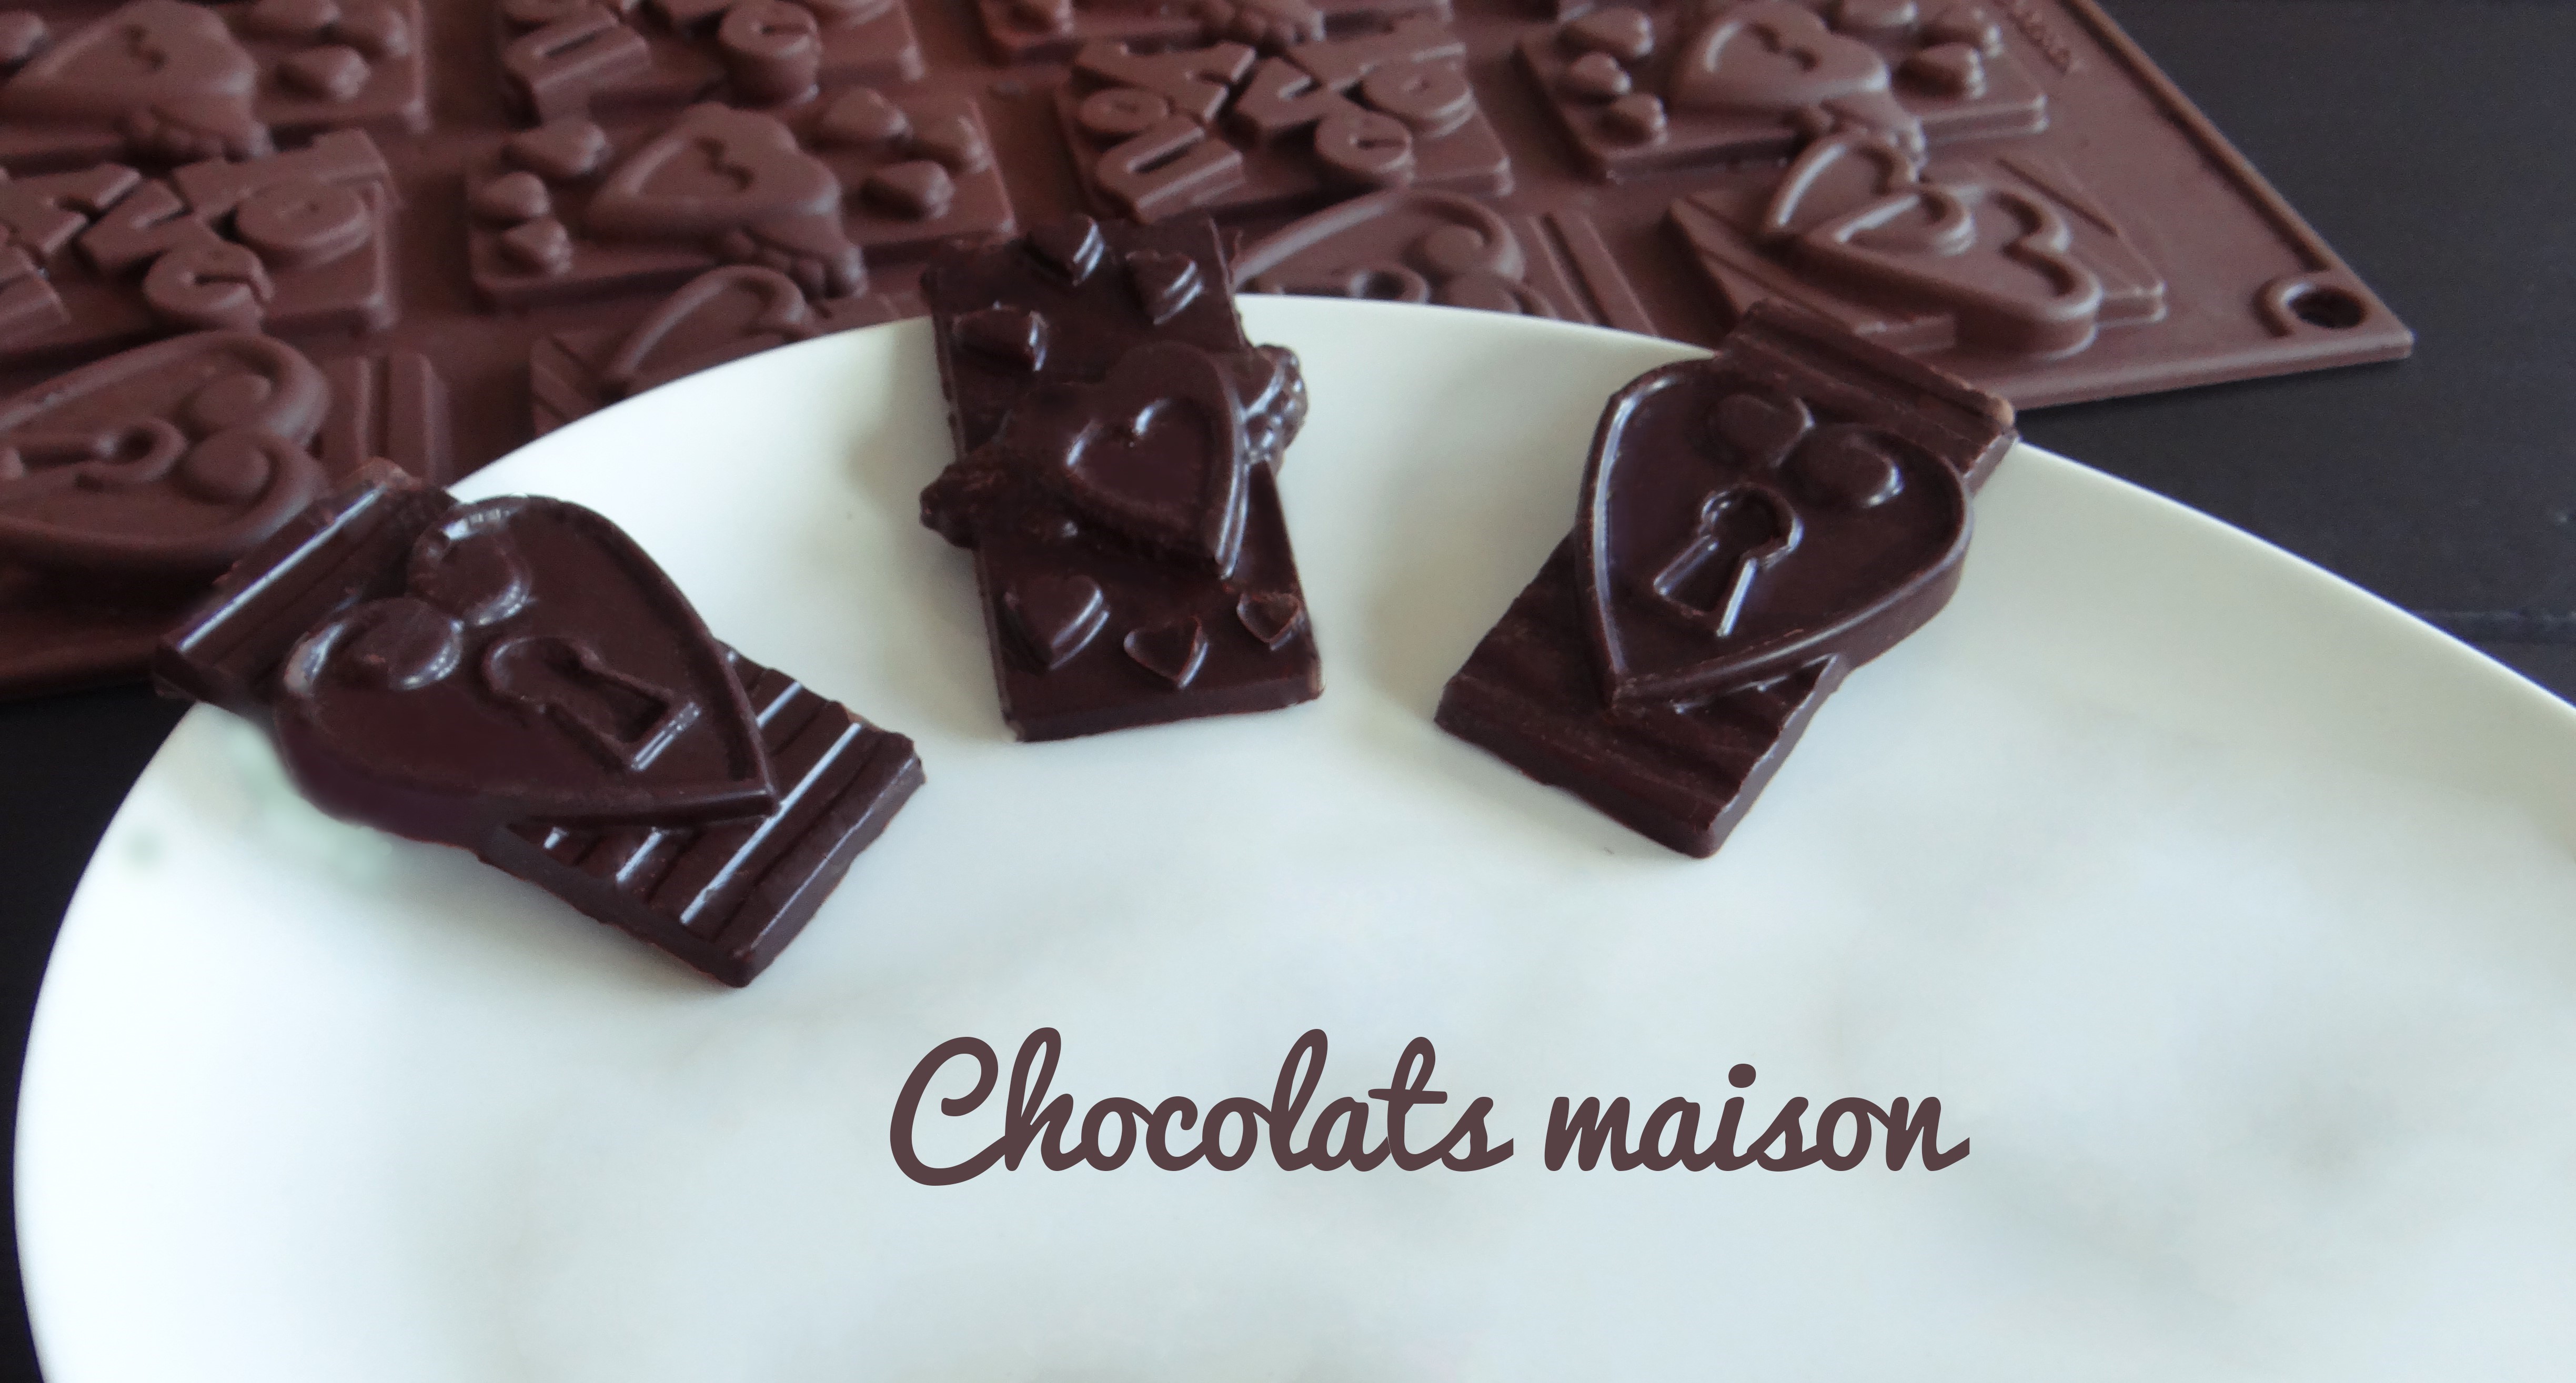 https://www.adeline-cuisine.fr/wp-content/uploads/2015/12/chocolats-maison-temp%C3%A9rage.jpg